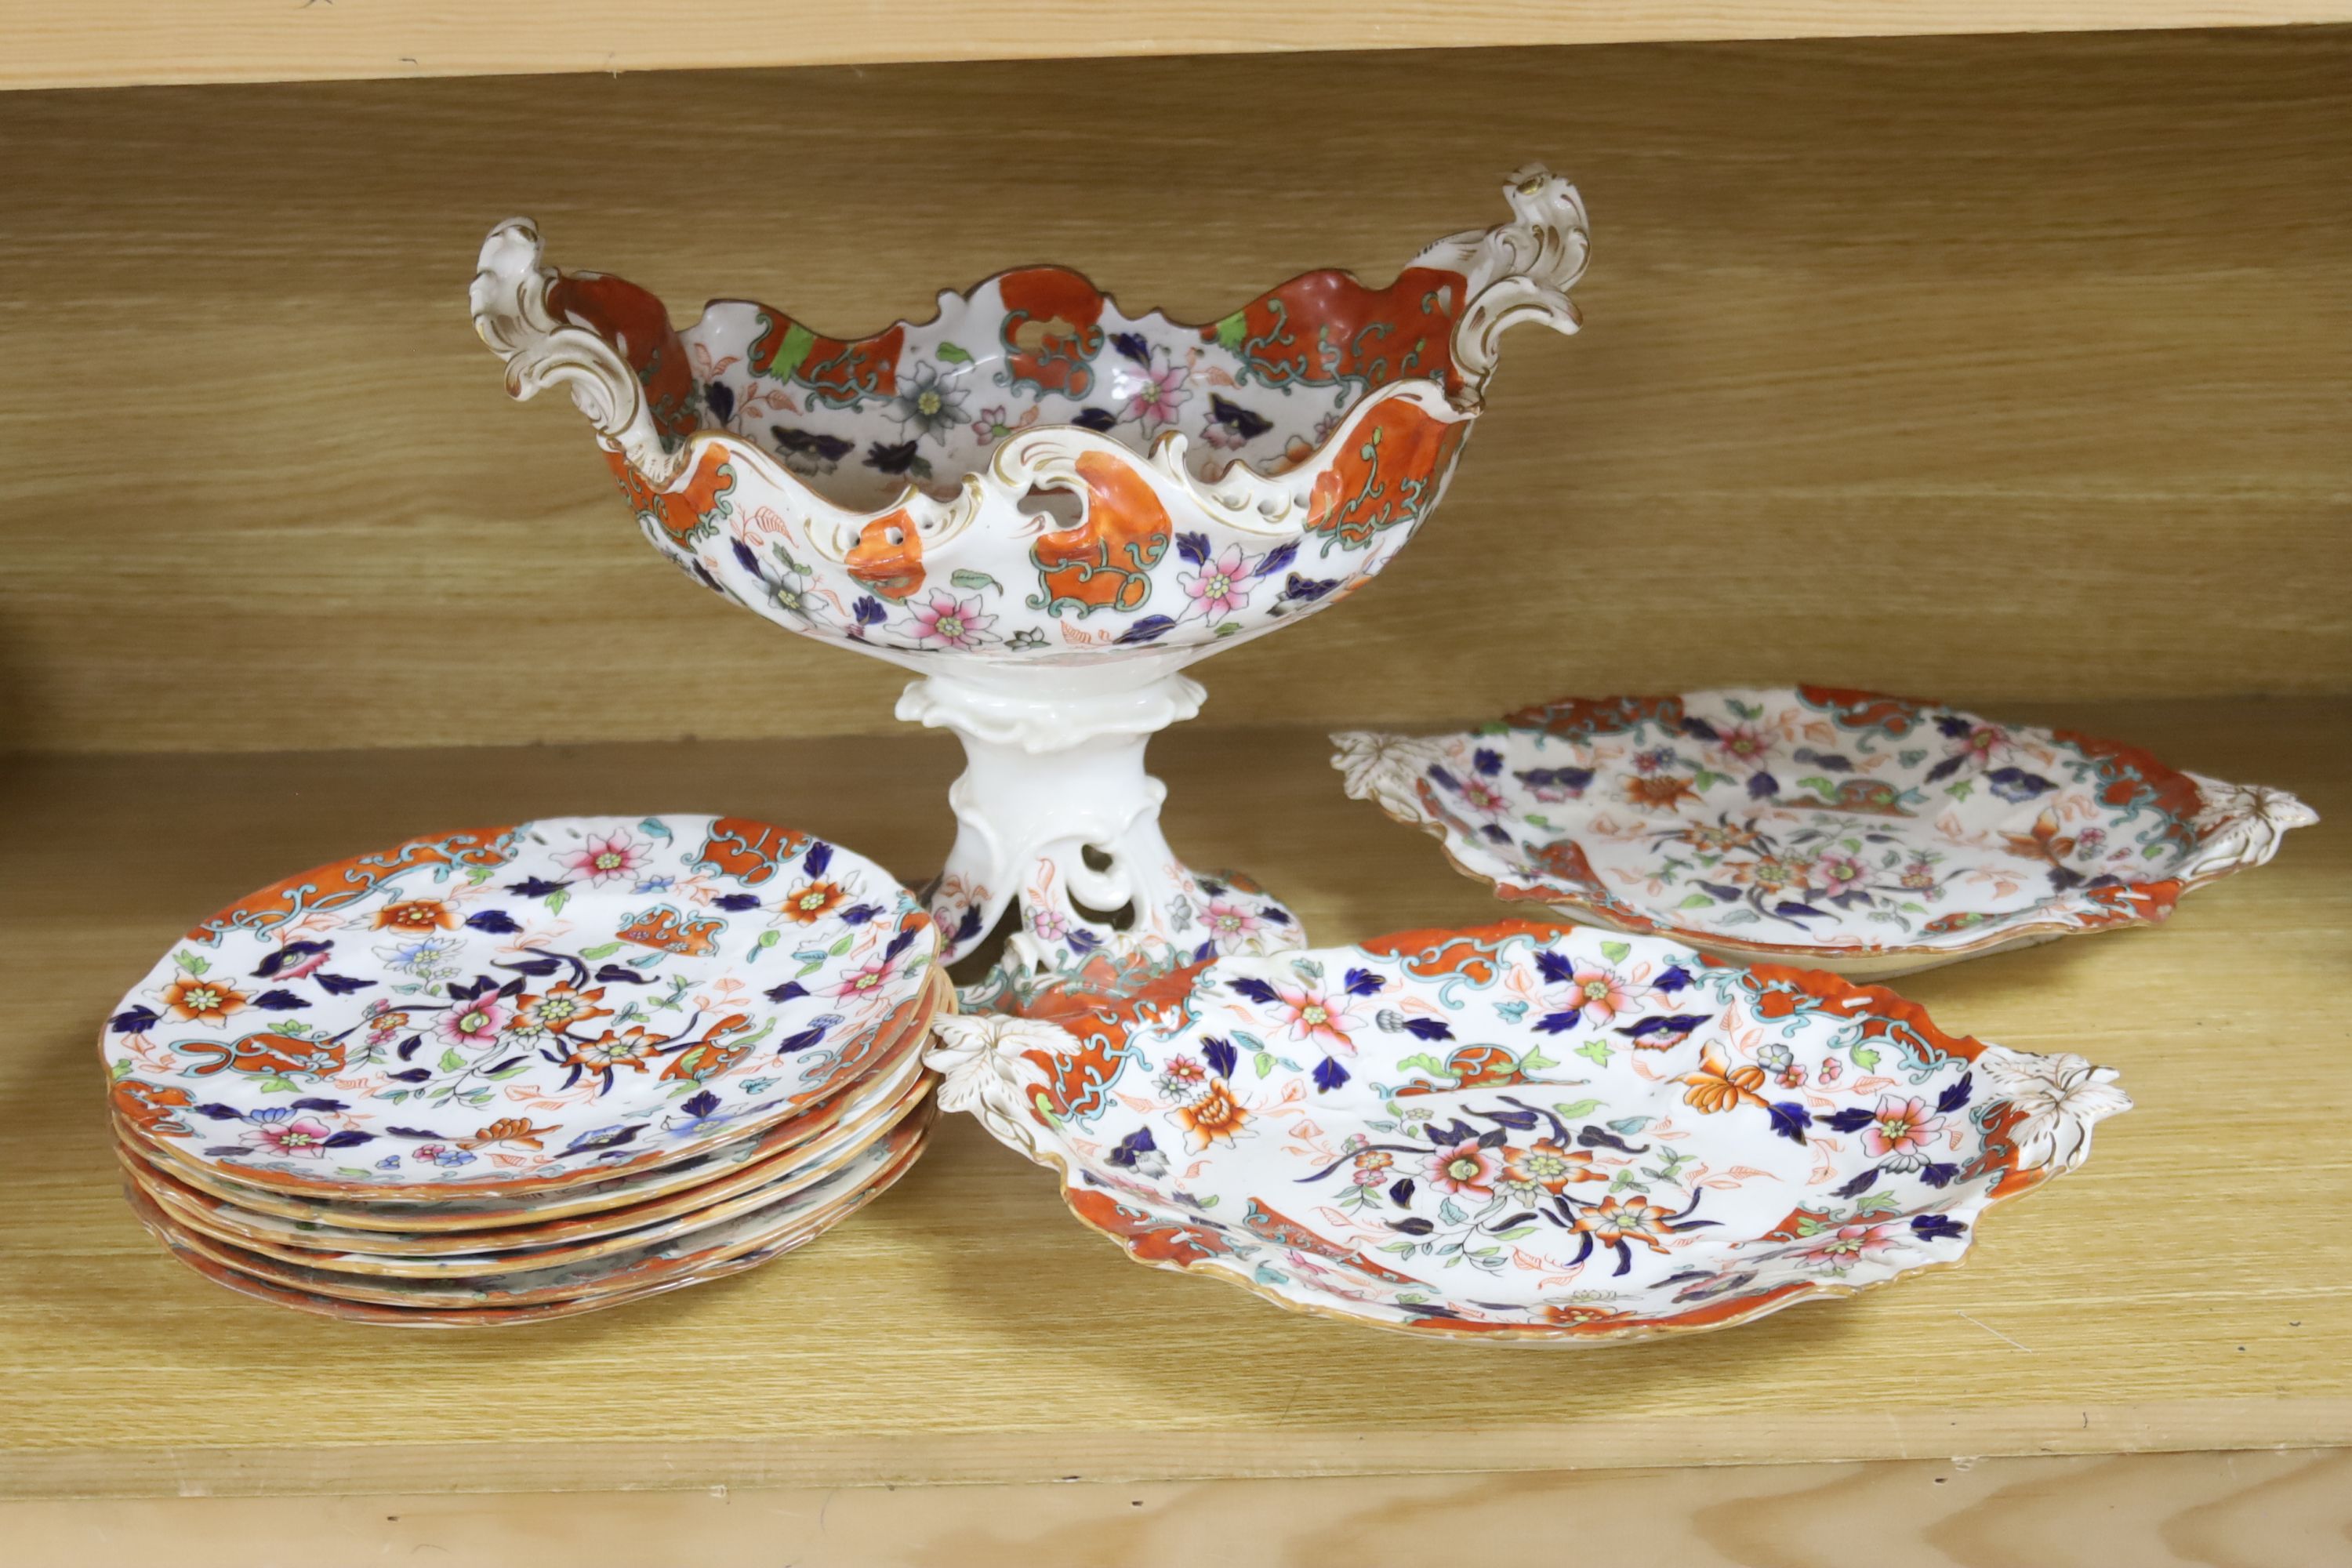 A 19th century English porcelain Imari pattern part dessert service